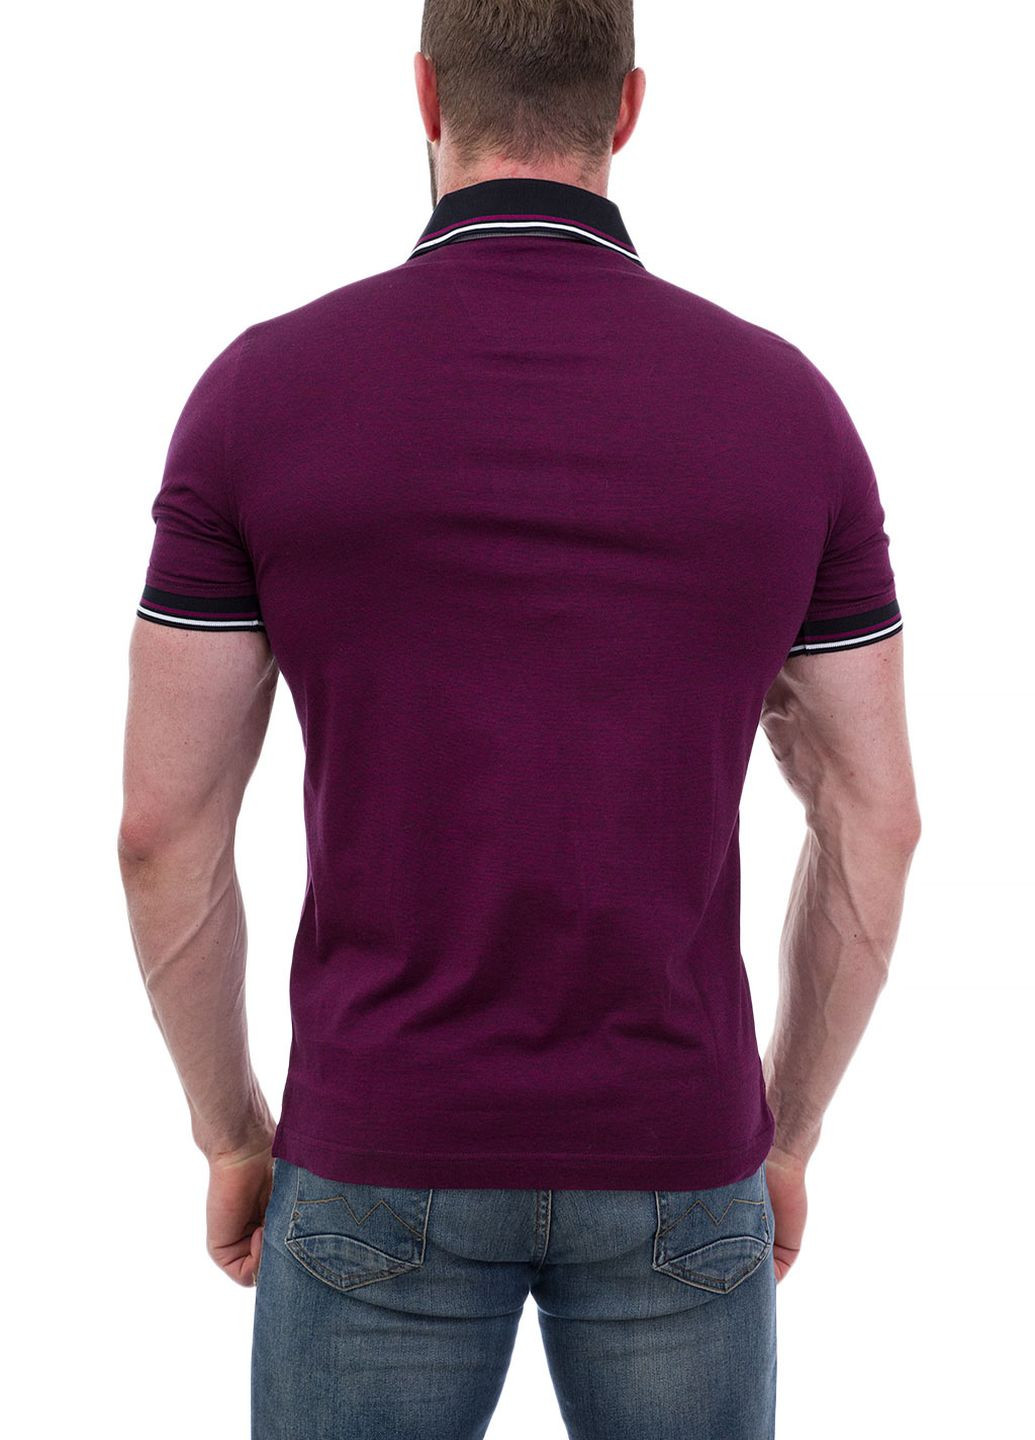 Фиолетовая футболка-поло для мужчин Monte Carlo однотонная